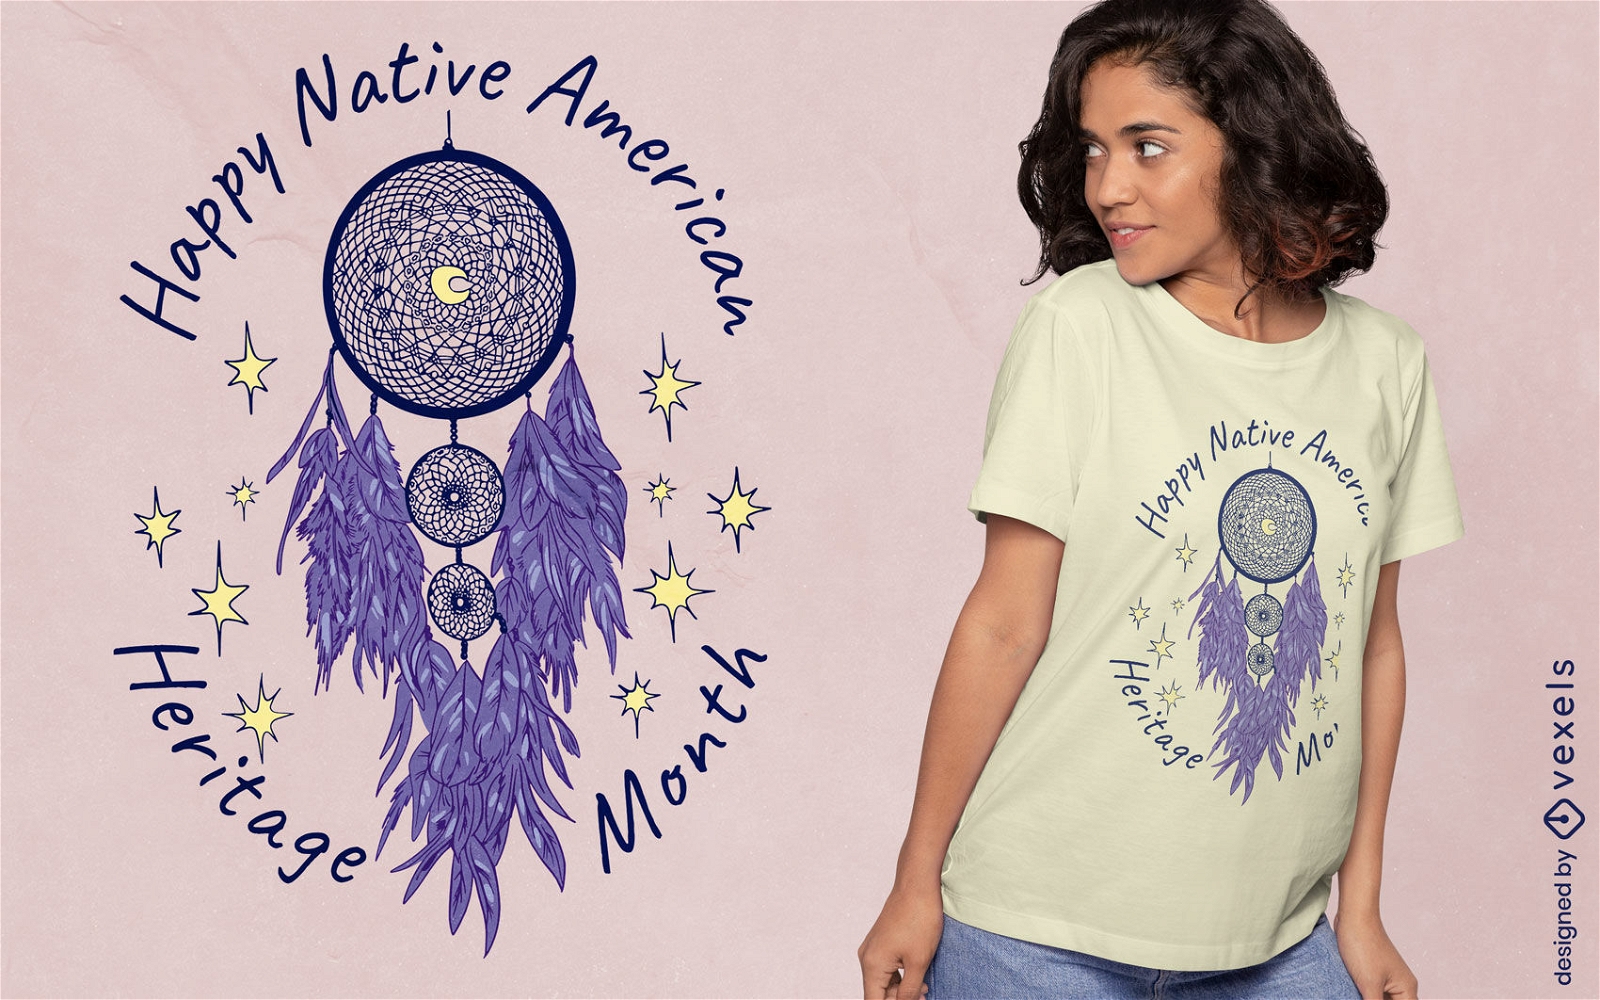 Native american dreamcatcher t-shirt design